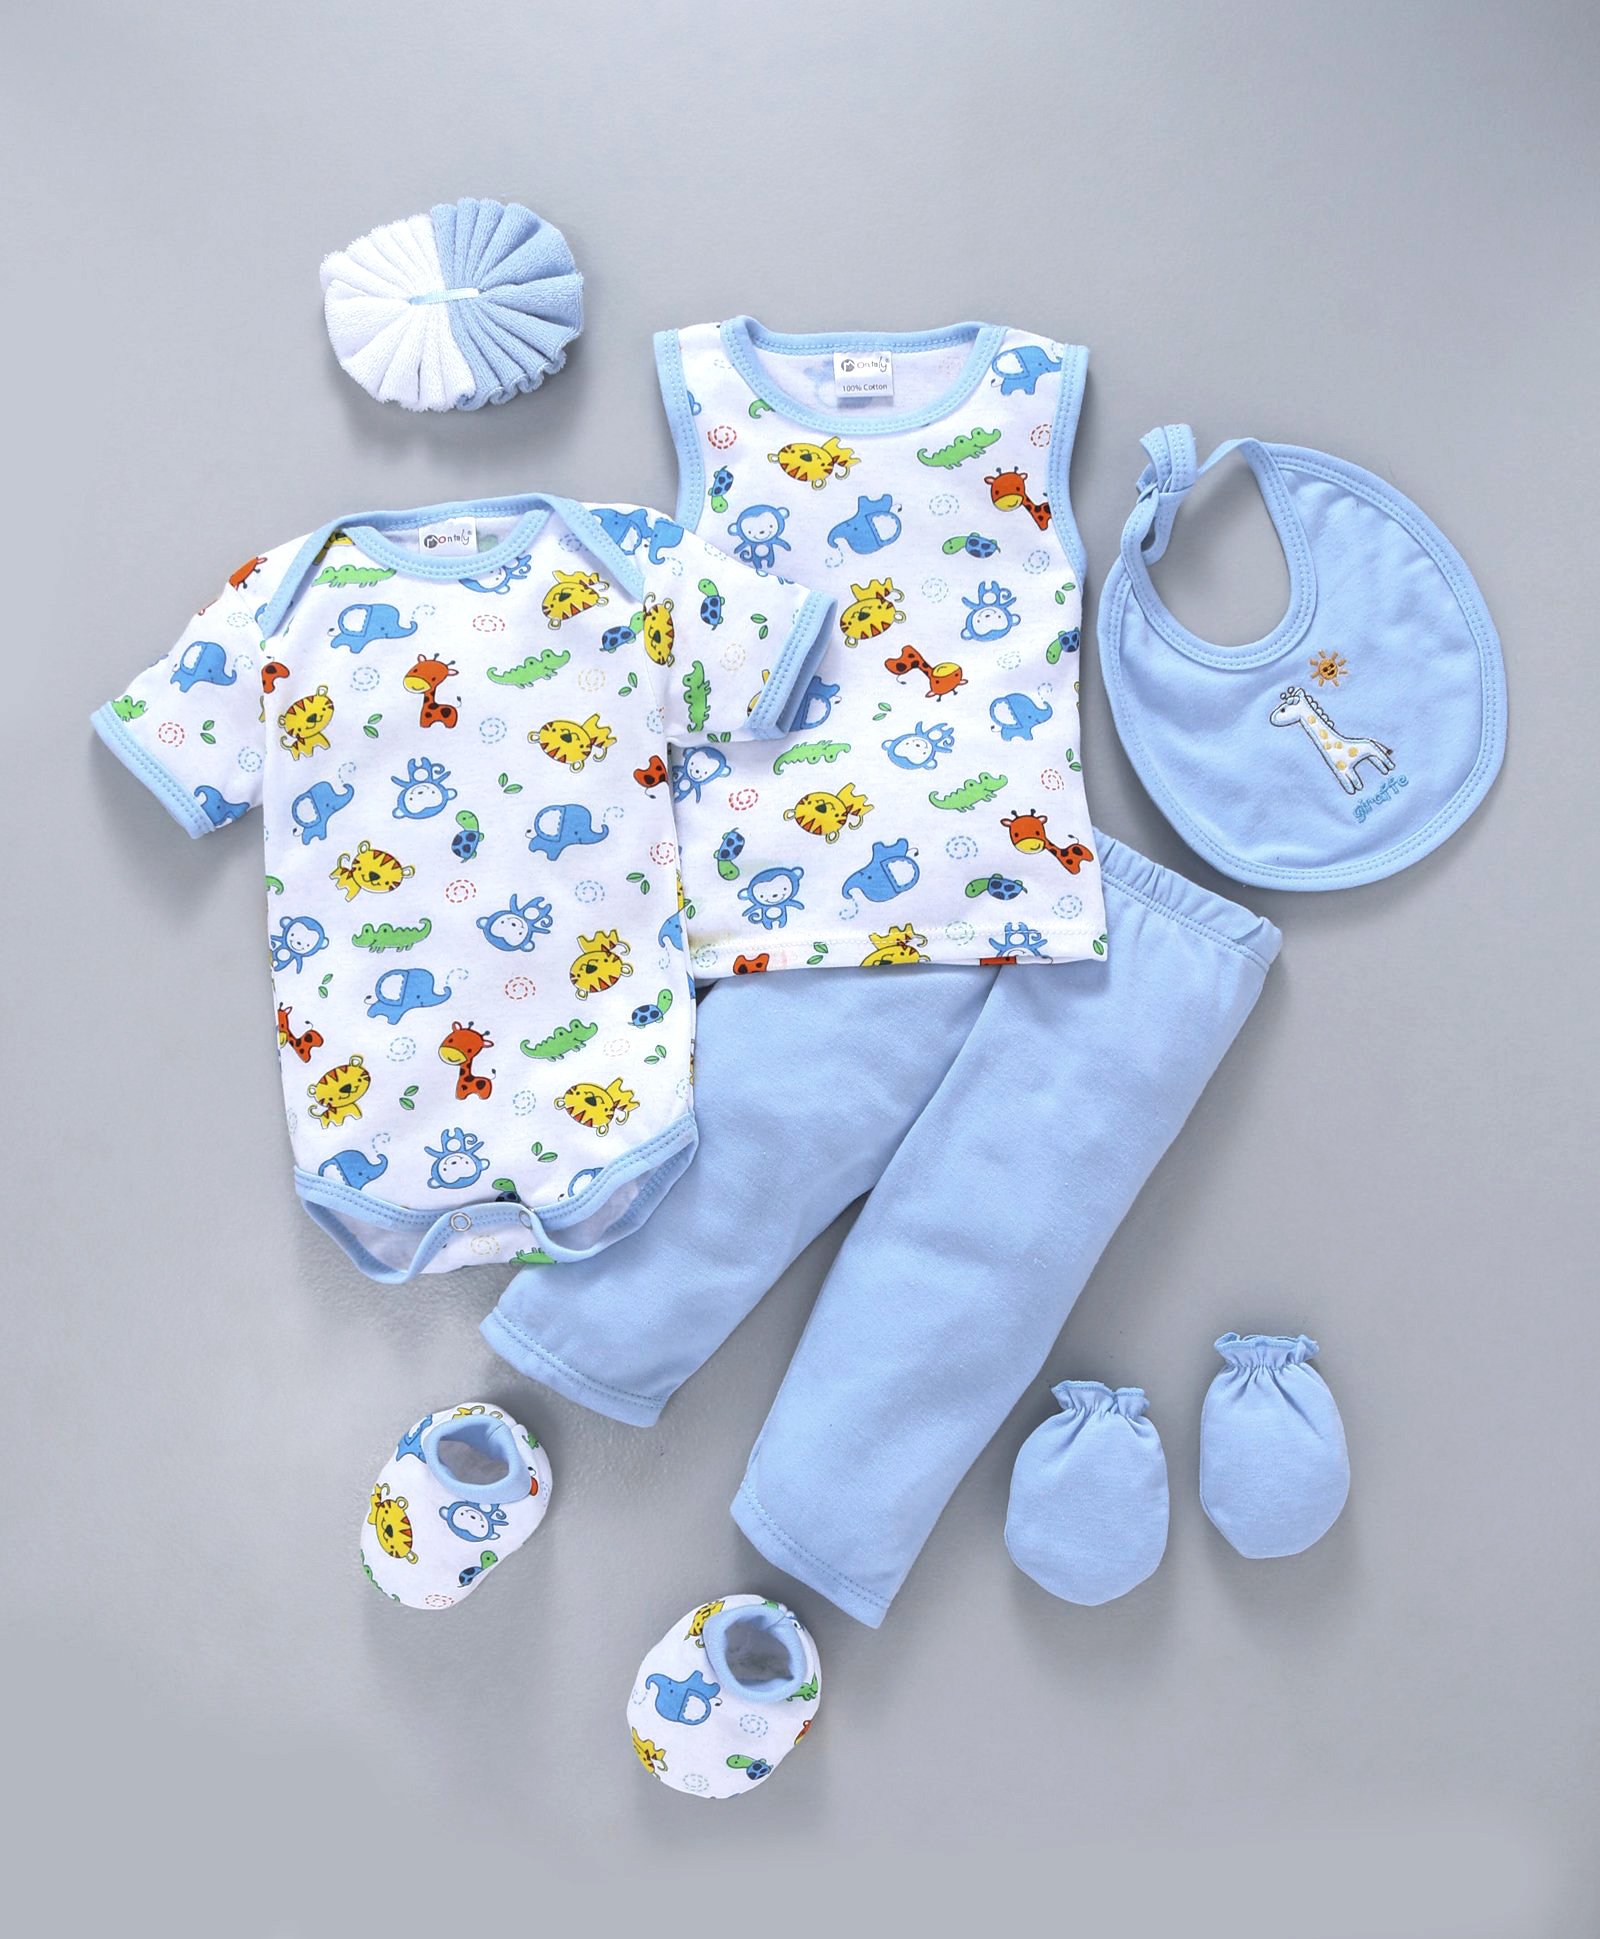 firstcry newborn baby clothes